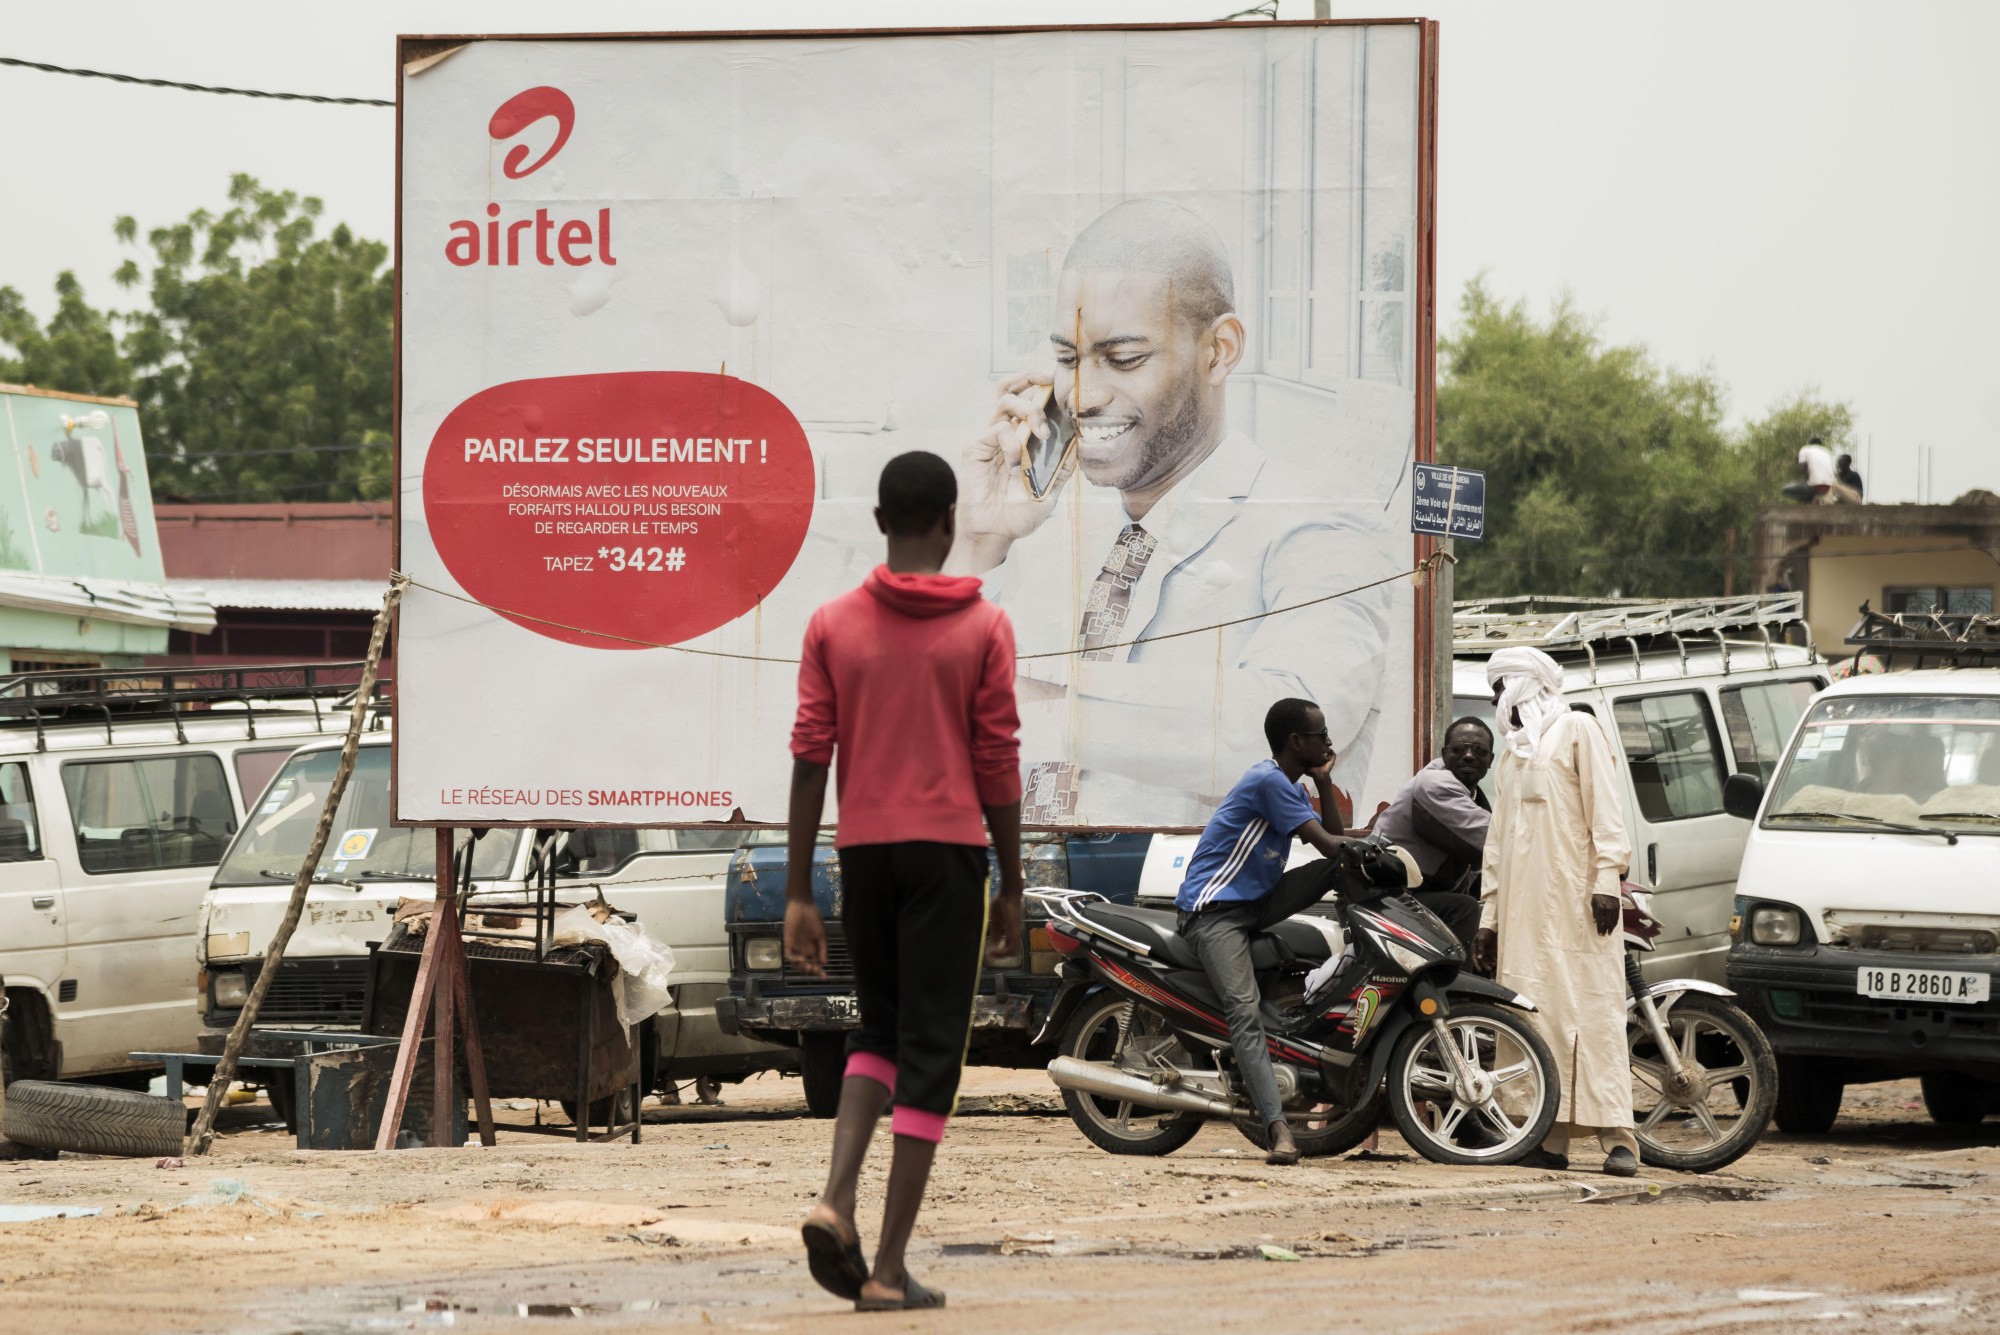 Pedestrians stand beside an advertisement for Bharti Airtel in N'Djamena, Chad, on&nbsp;Aug. 15, 2017.&nbsp;